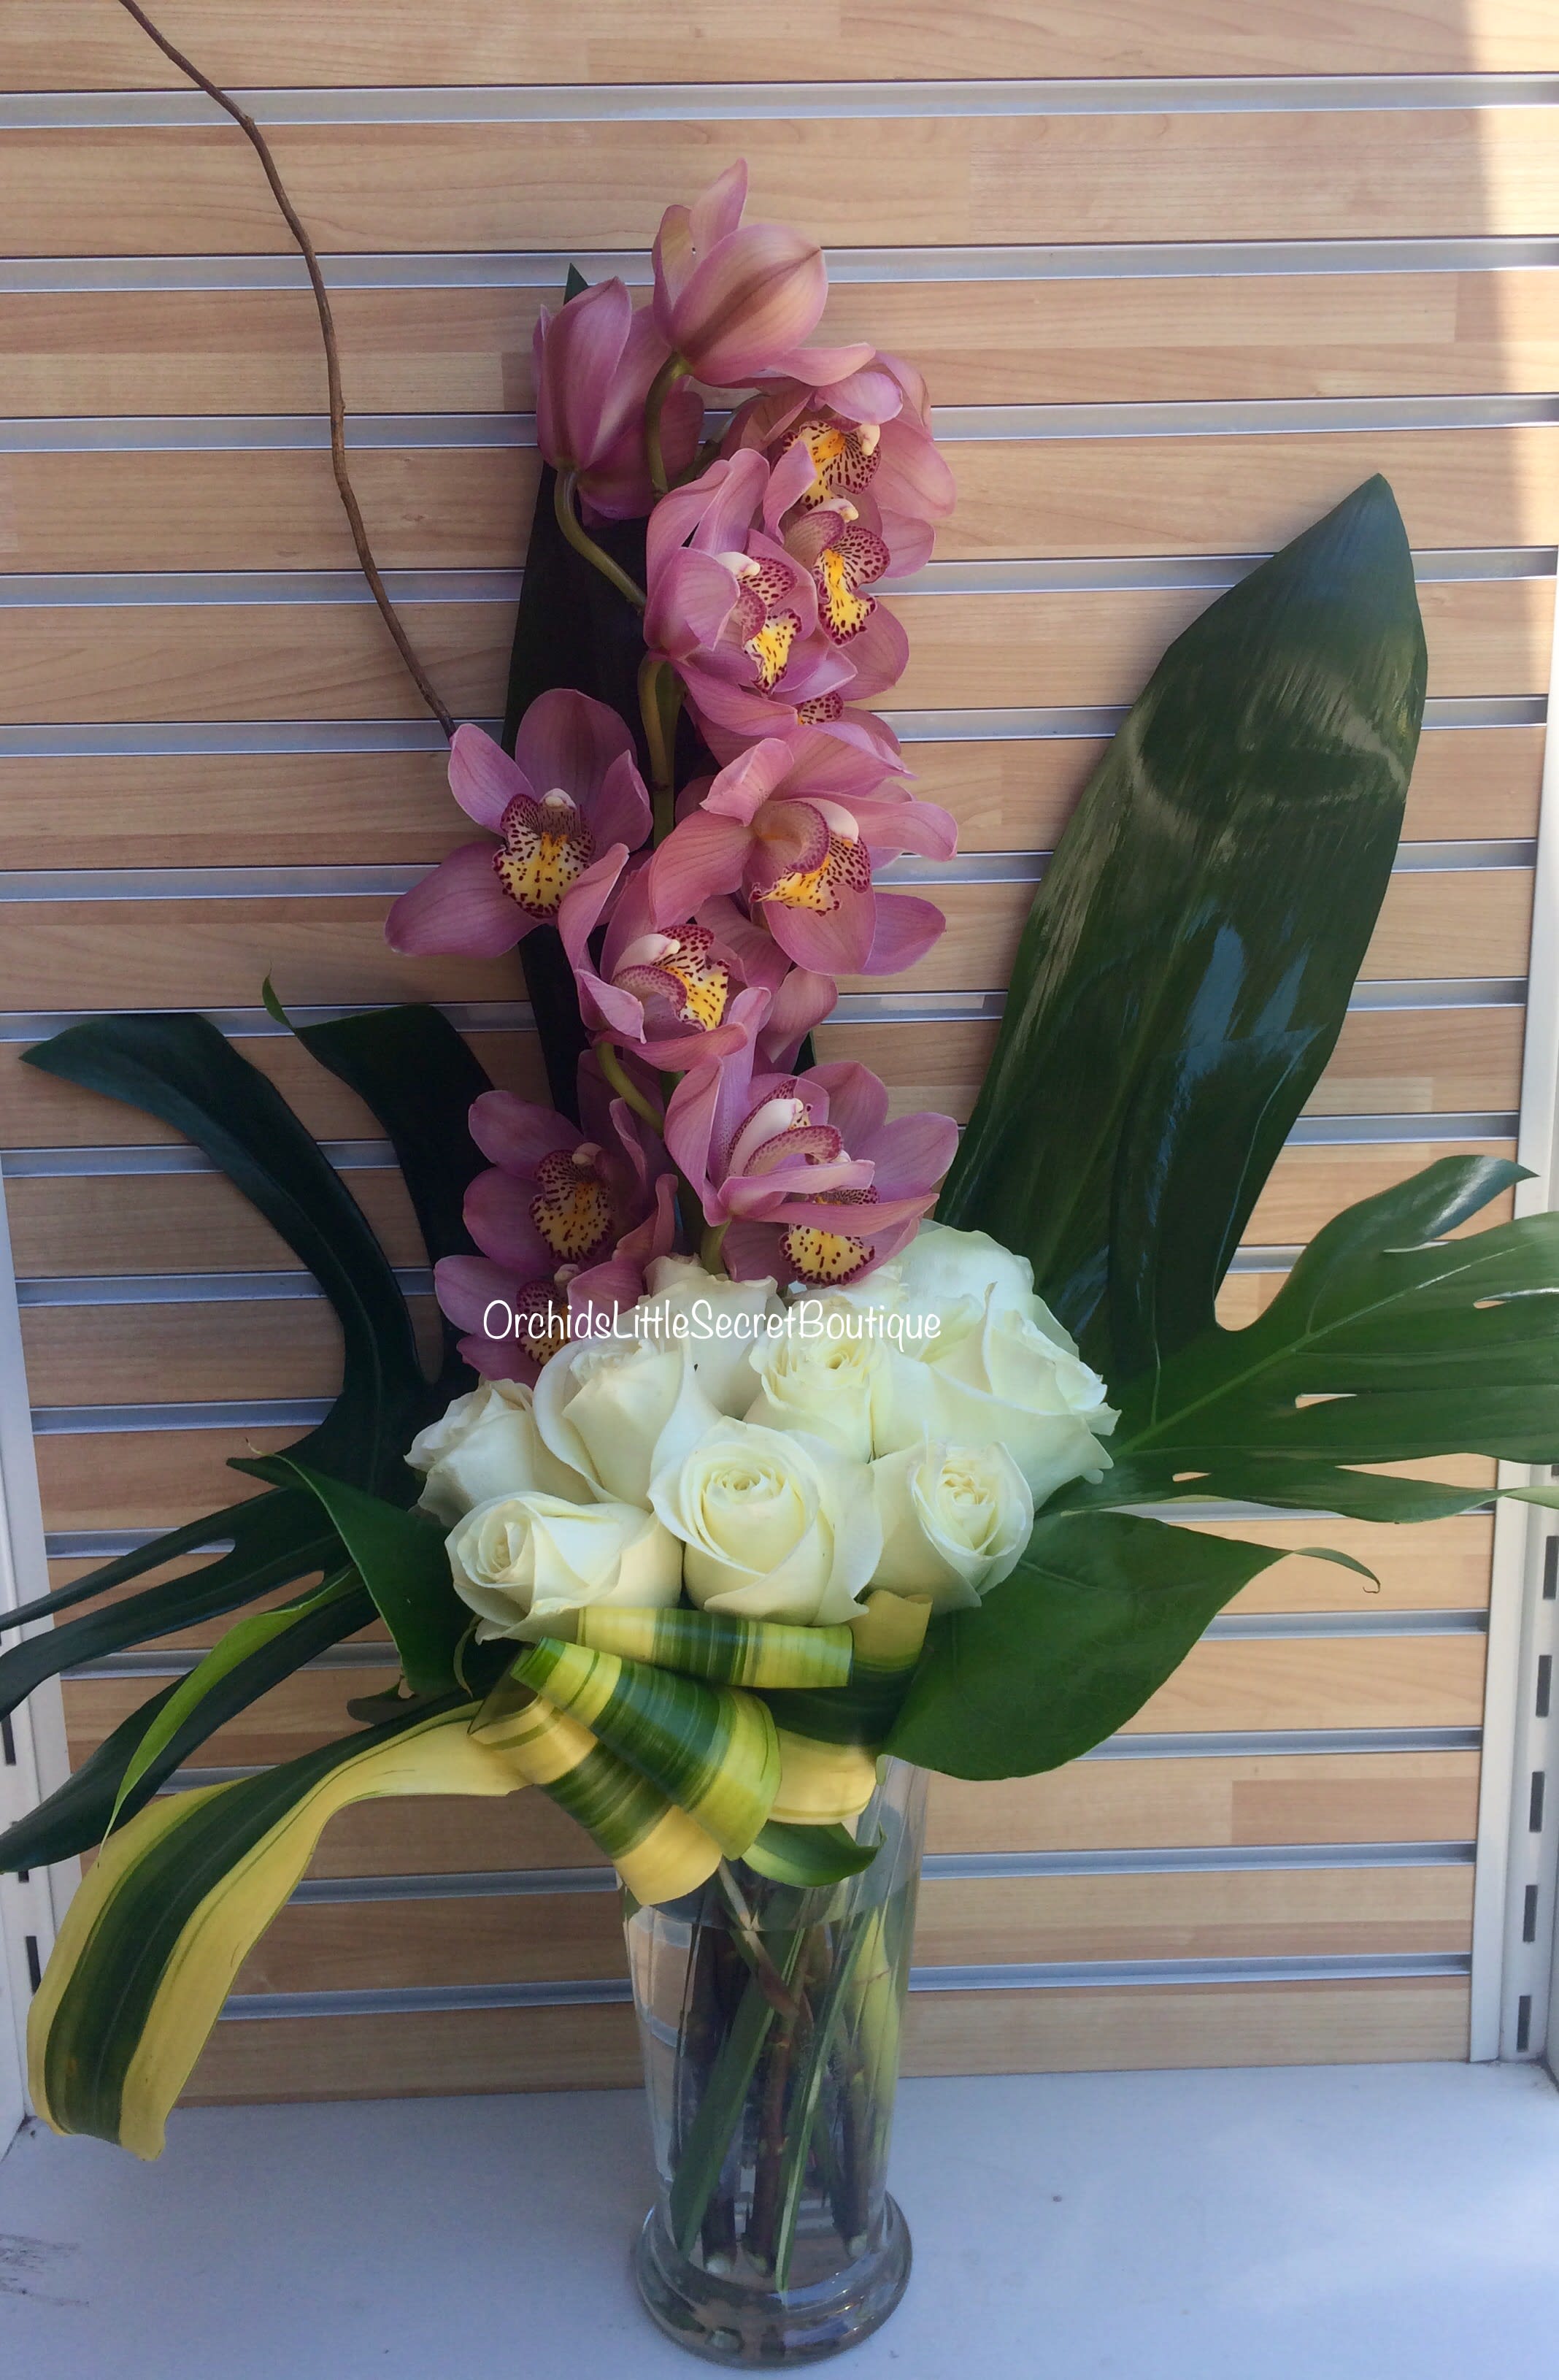 Majesty Lady Cymbidium Orchid And Rose Arrangement In Placentia Ca Orchids Little Secret Boutique